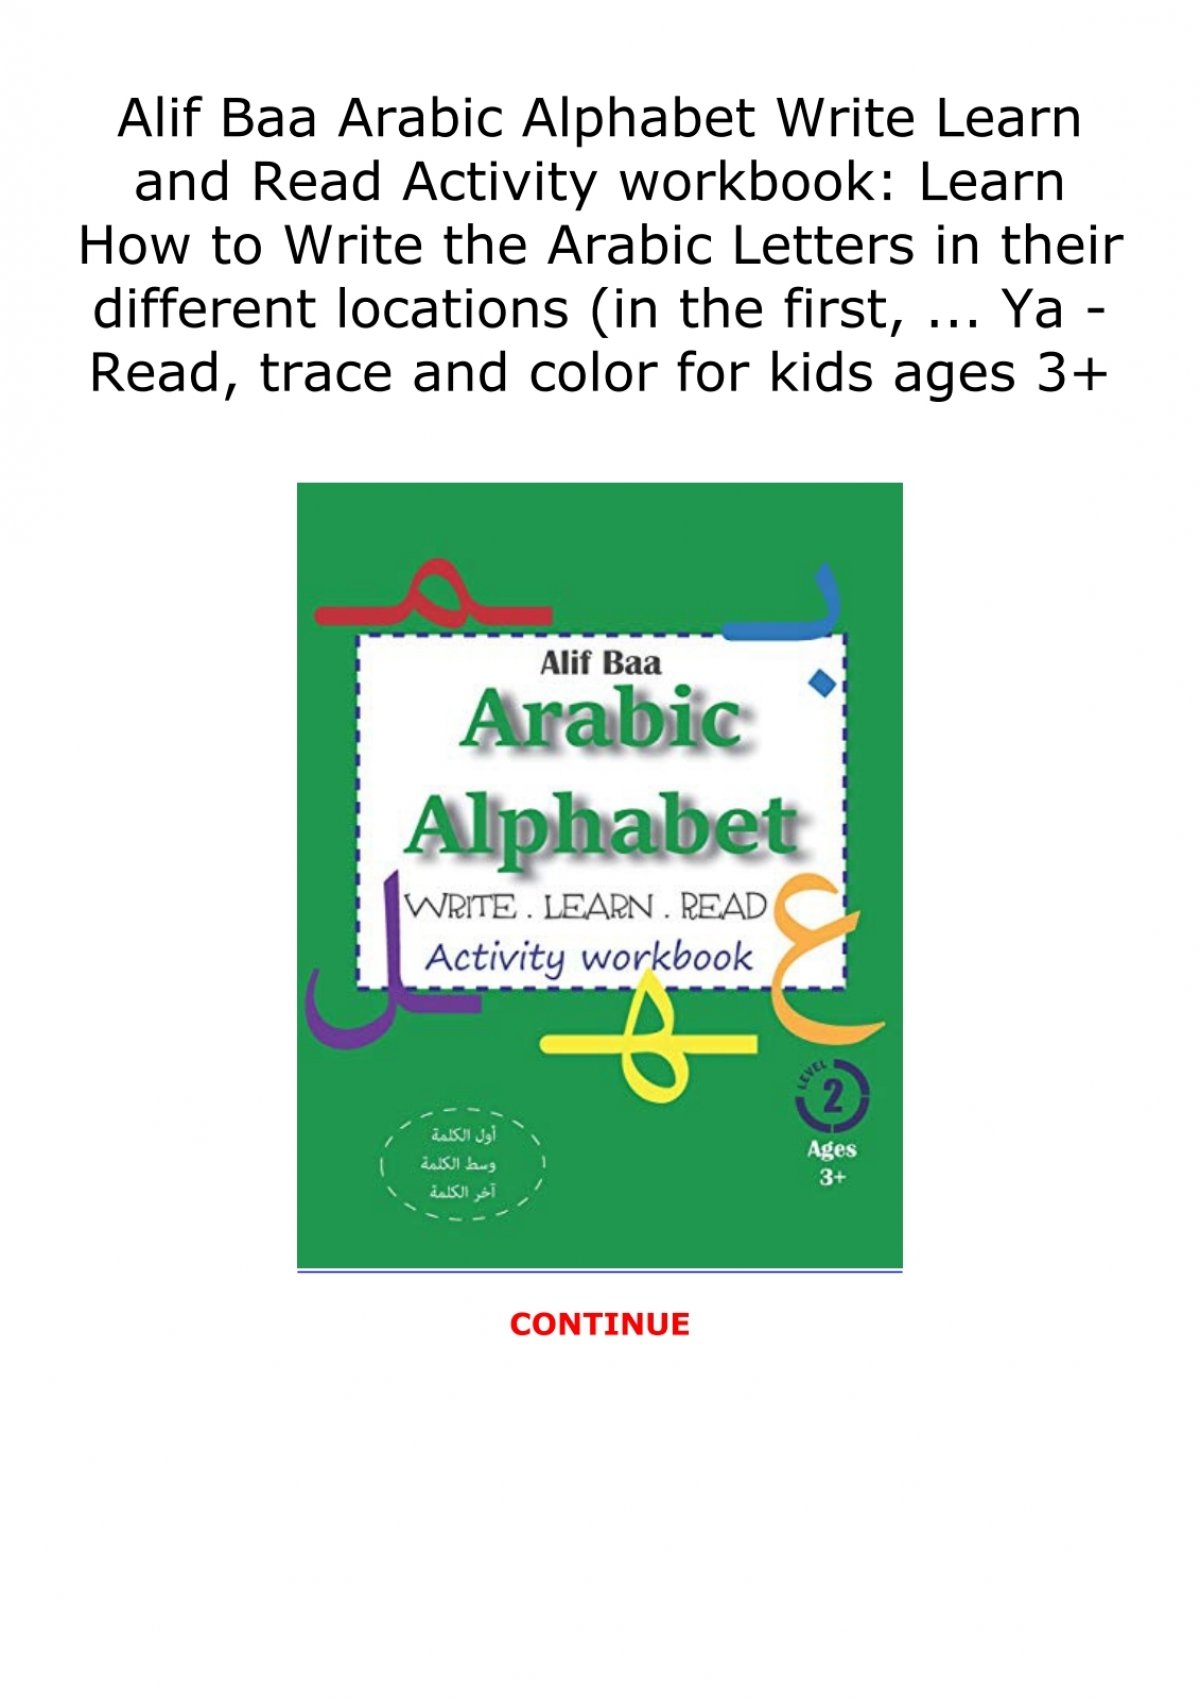 alif-baa-arabic-alphabet